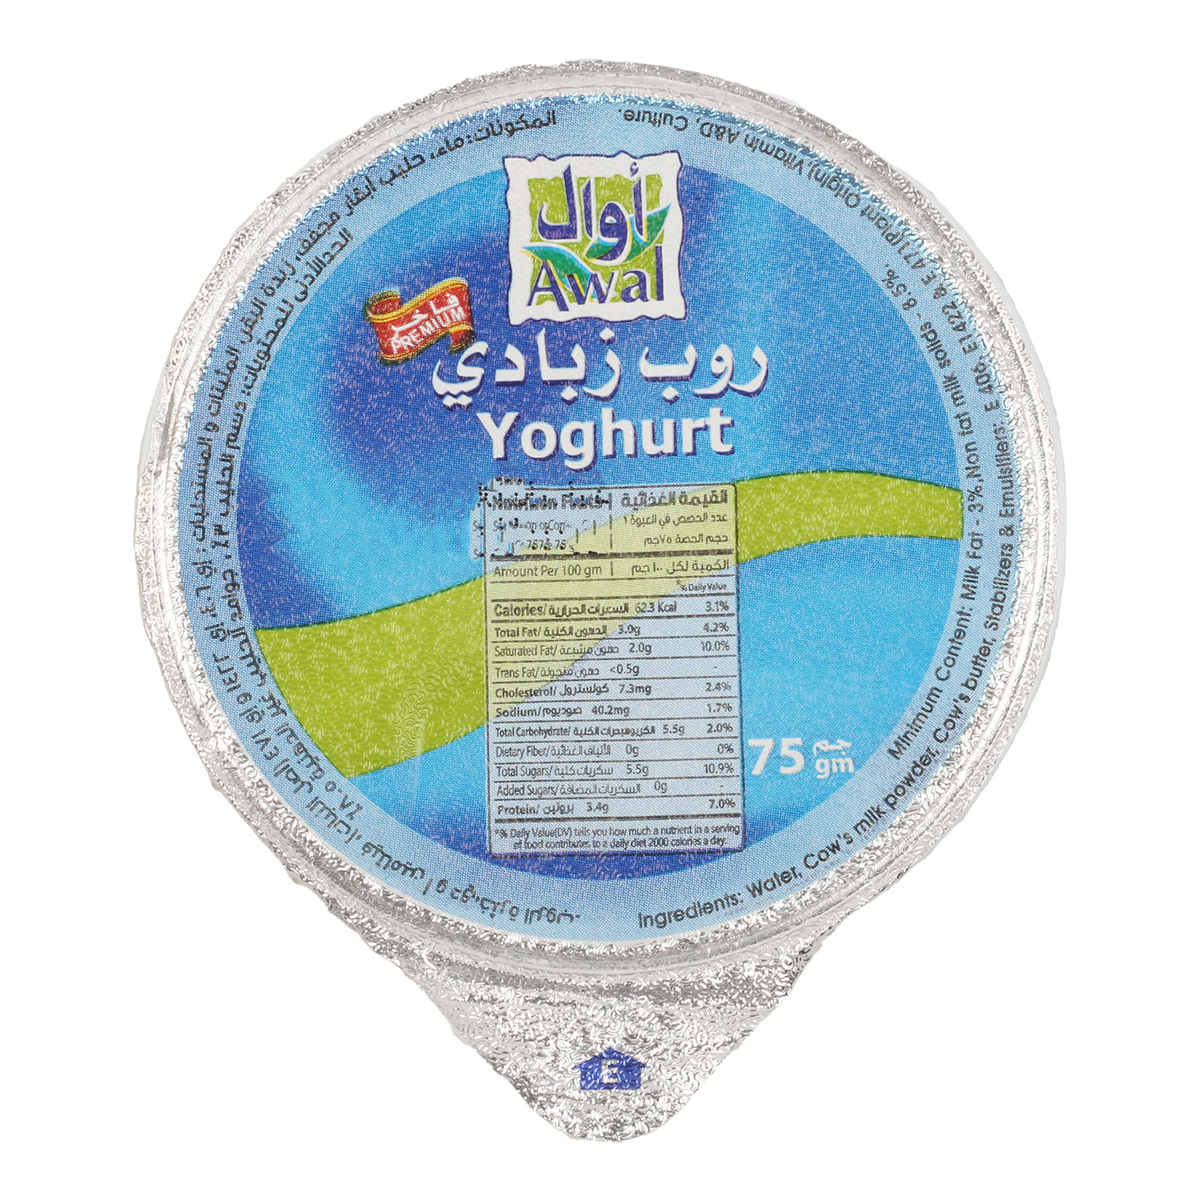 Awal Yoghurt 6 x 75g